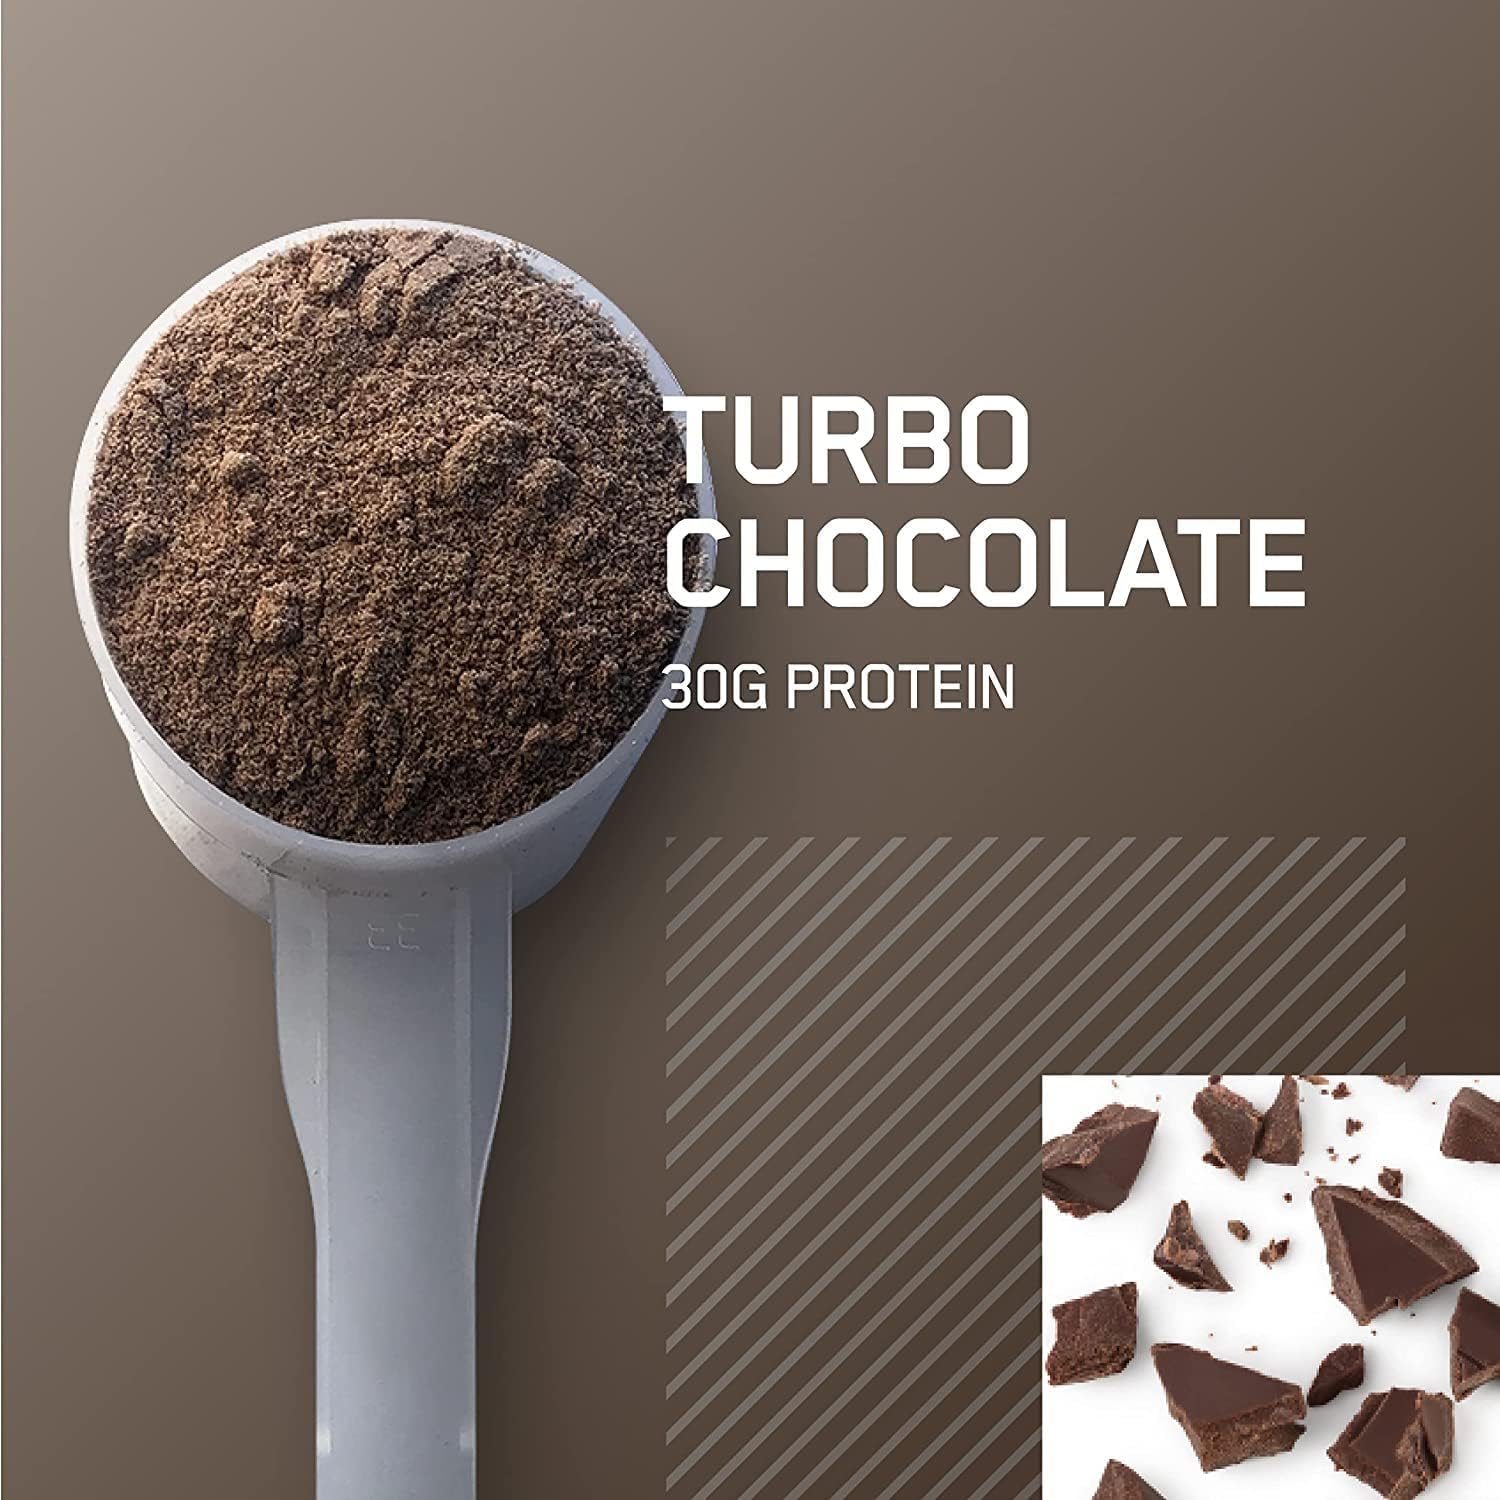 "Turbo Chocolate Flavor"